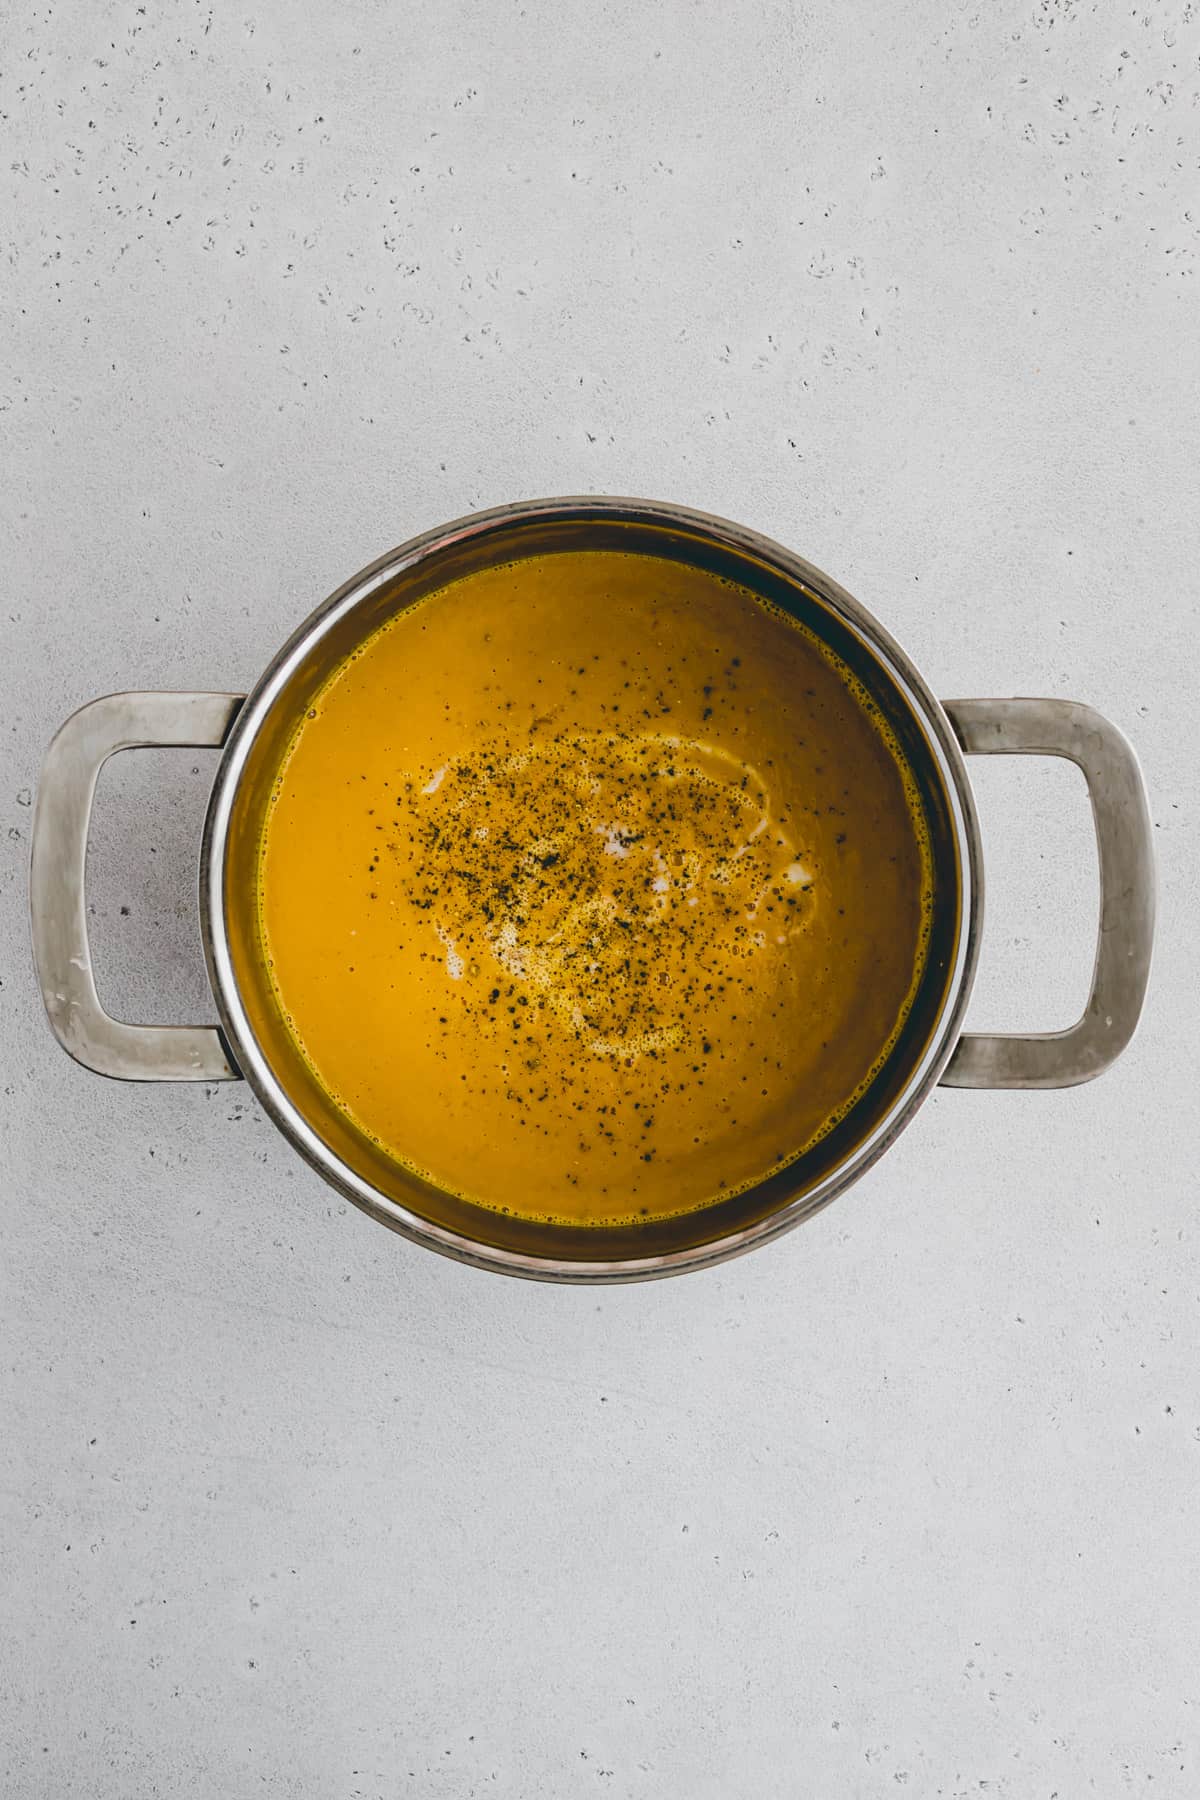 Red Kuri Squash Soup Recipe Step-11